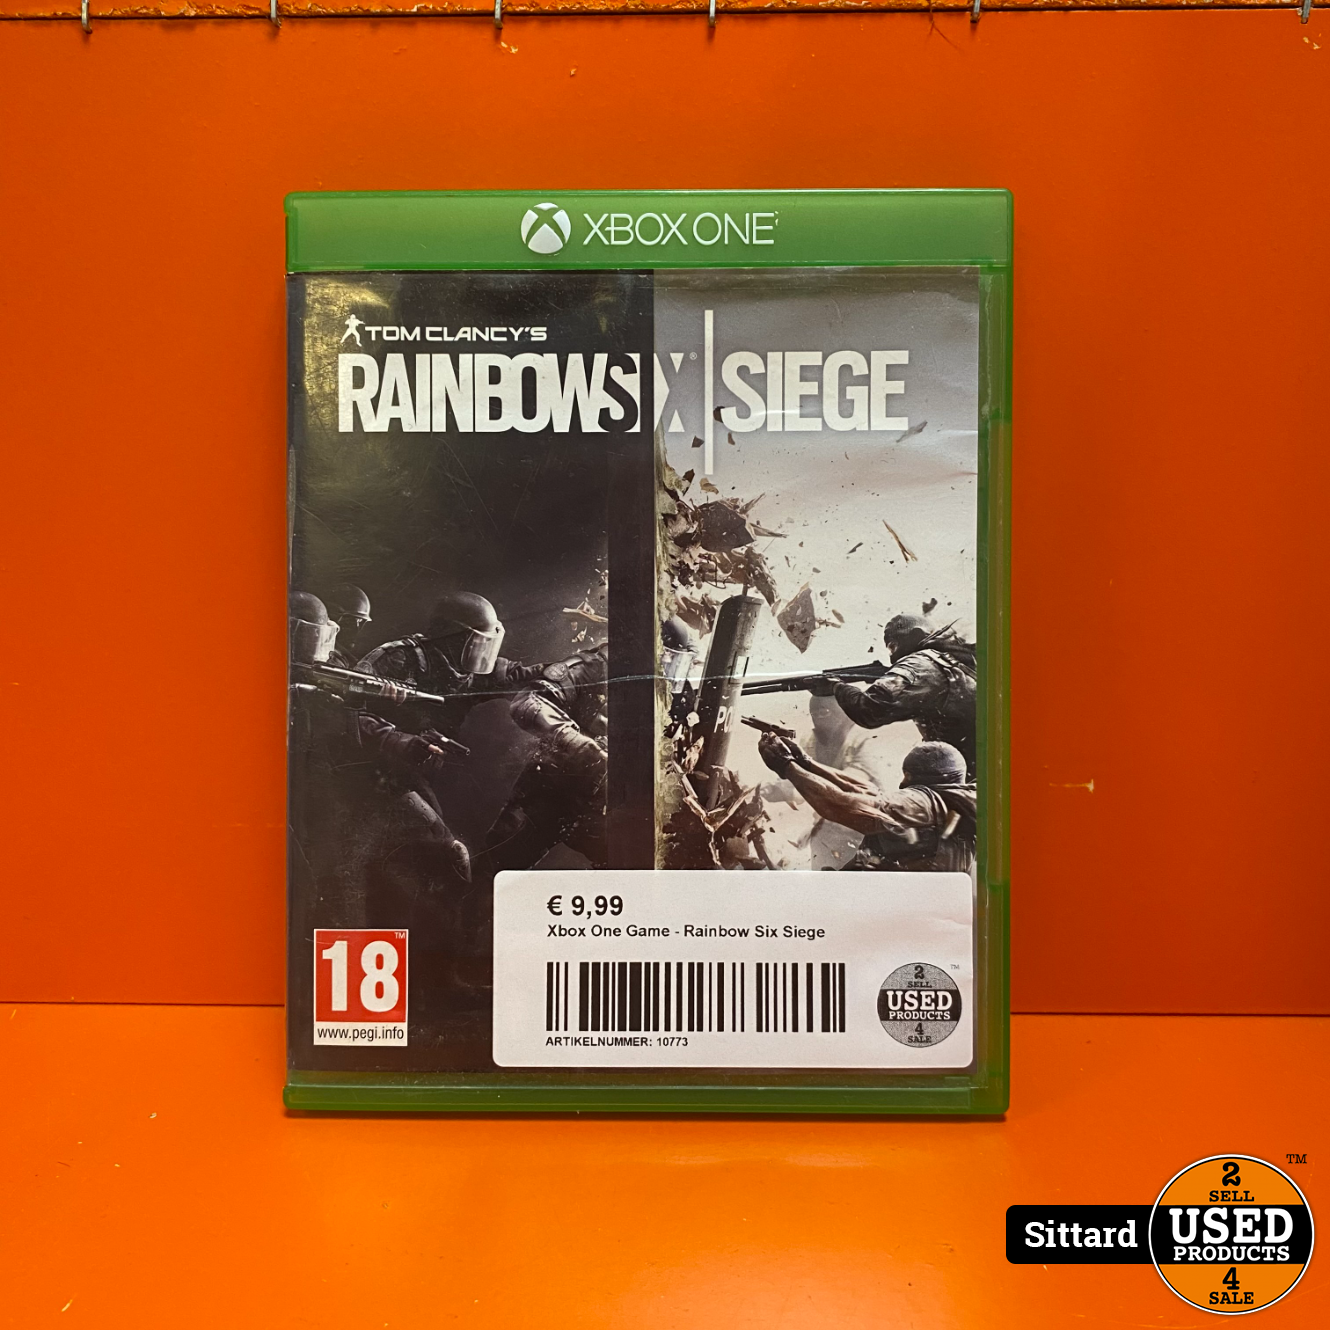 bladerdeeg Toegangsprijs Consulaat Xbox One Game - Rainbow Six Siege - Used Products Sittard